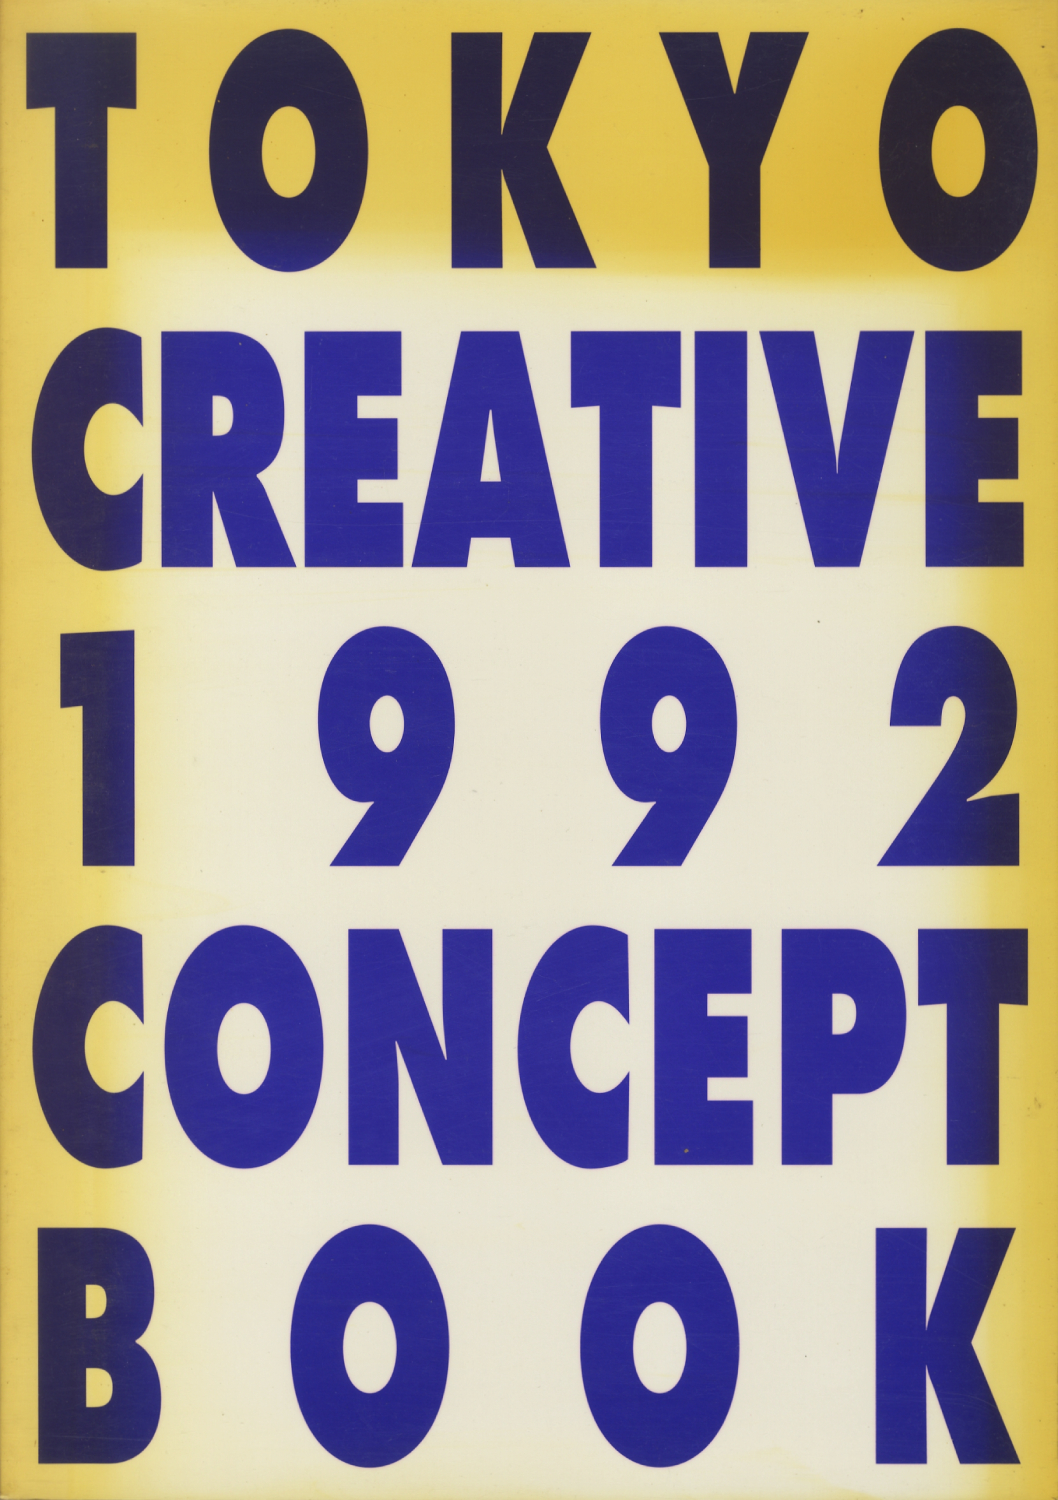 TOKYO CREATIVE 1992 CONCEPT BOOK　東京クリエイティブ’92コンセプトブック［image1］